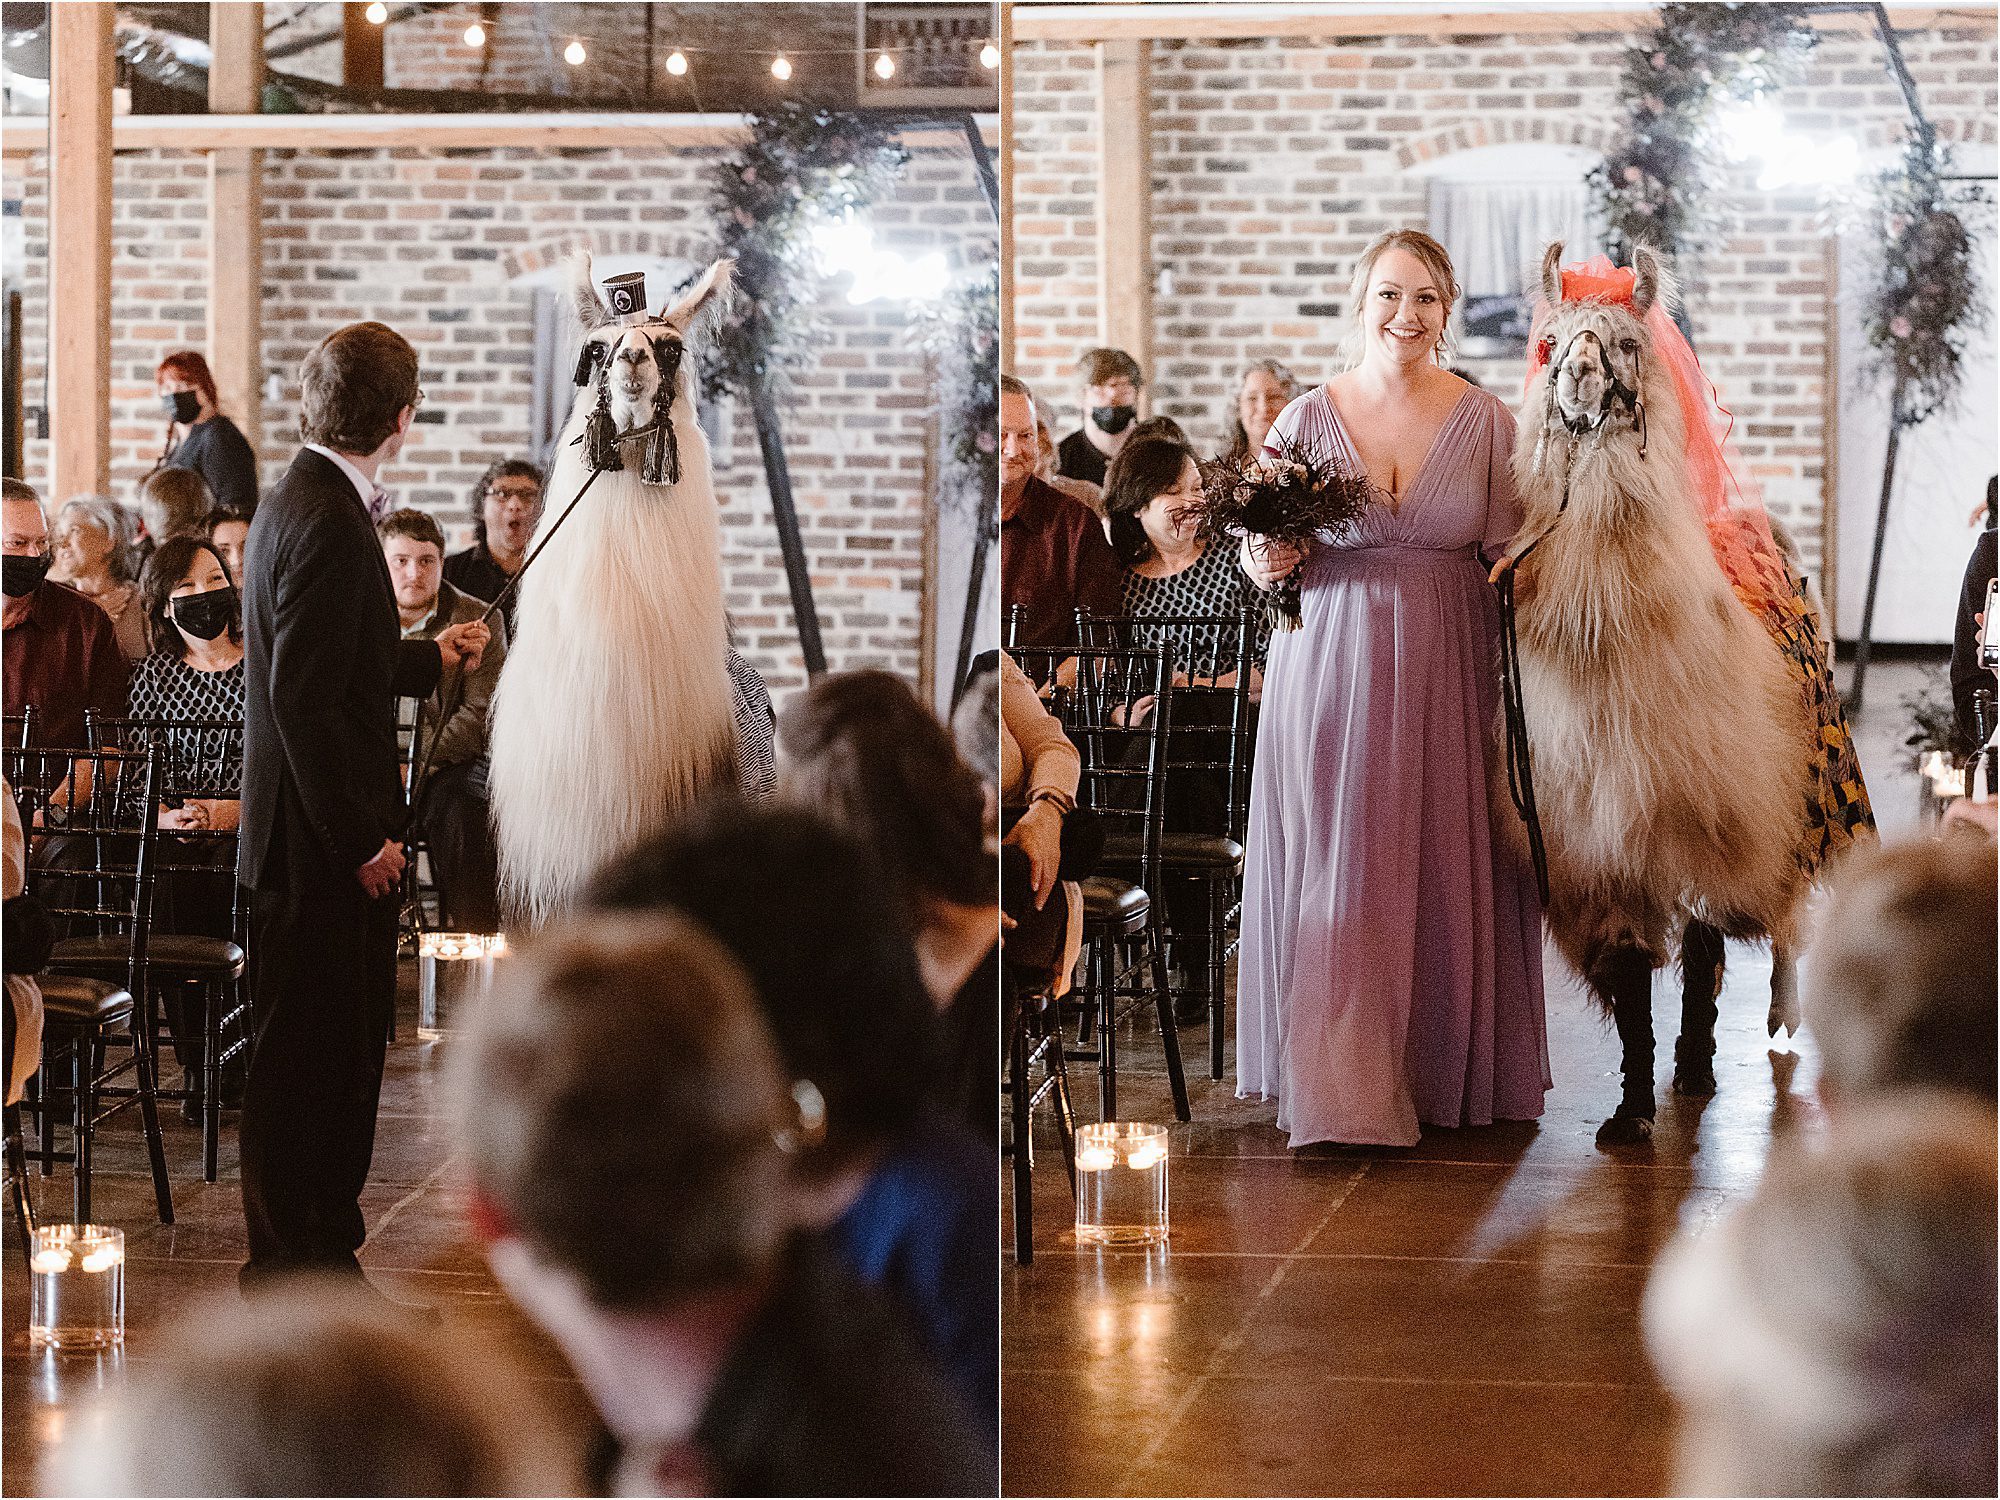 Llama flower girl and llama ring bearer at wedding